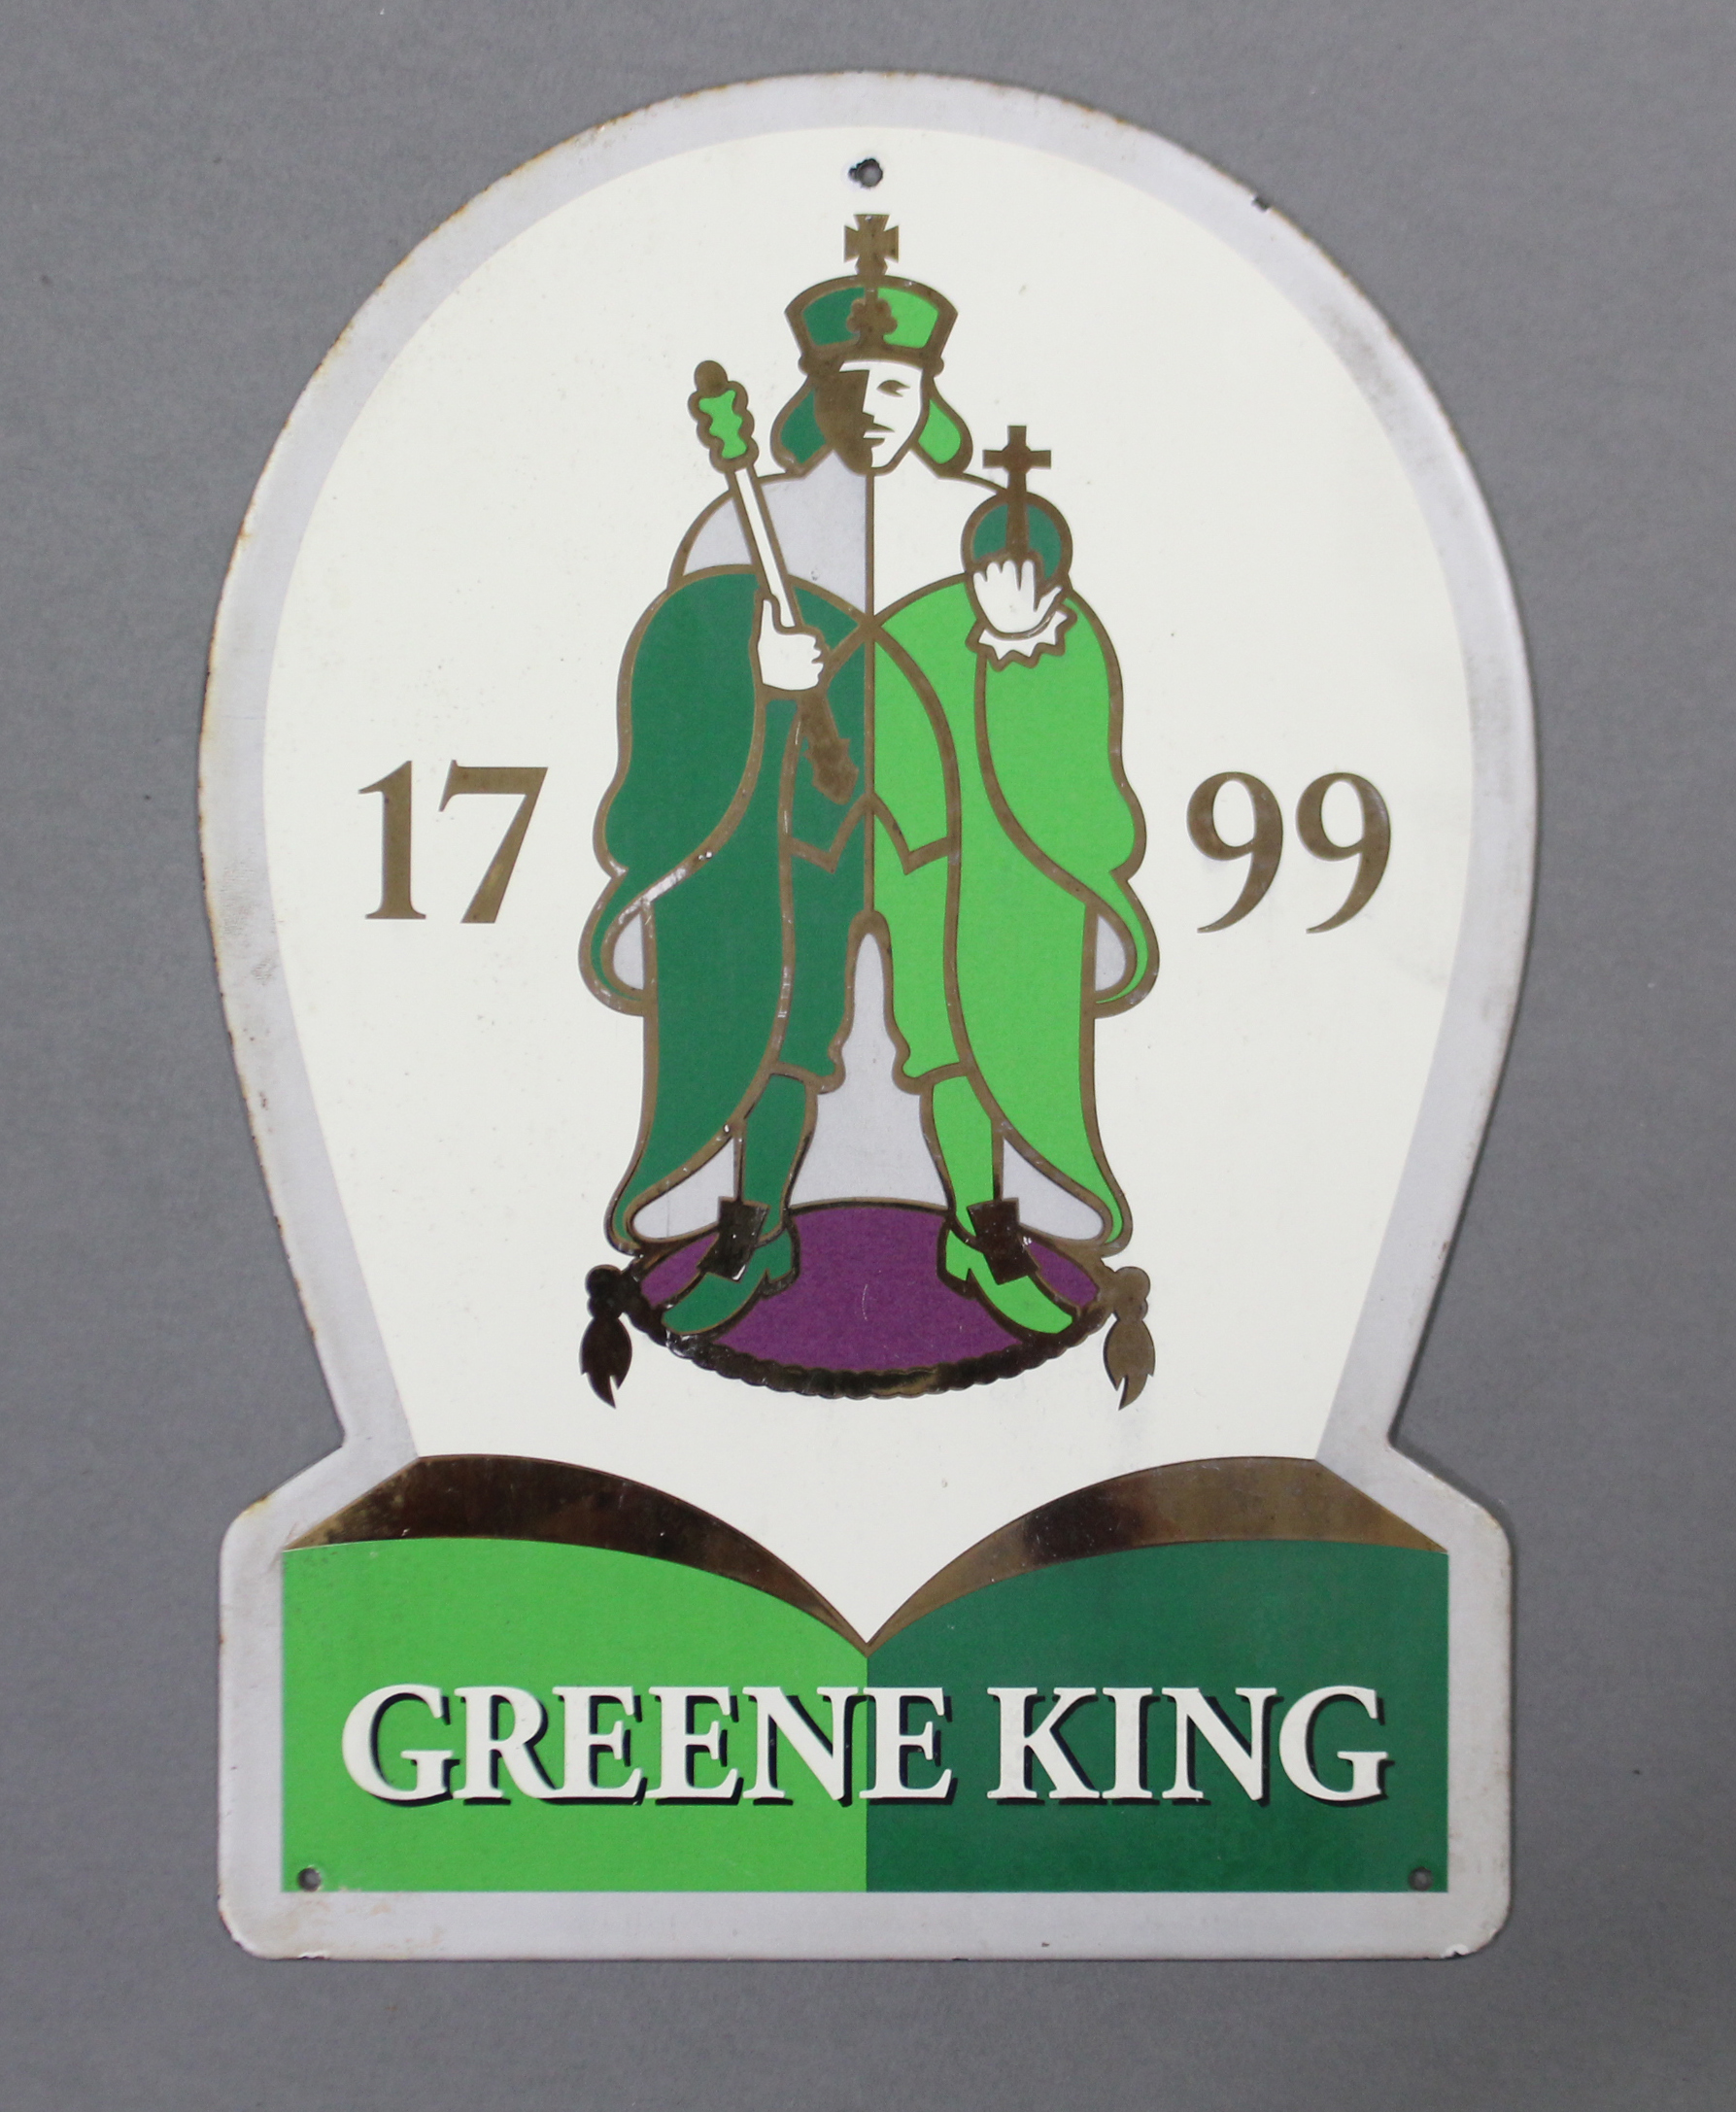 An enamelled “GREENE KING” sign, 14½” x 10¼”.